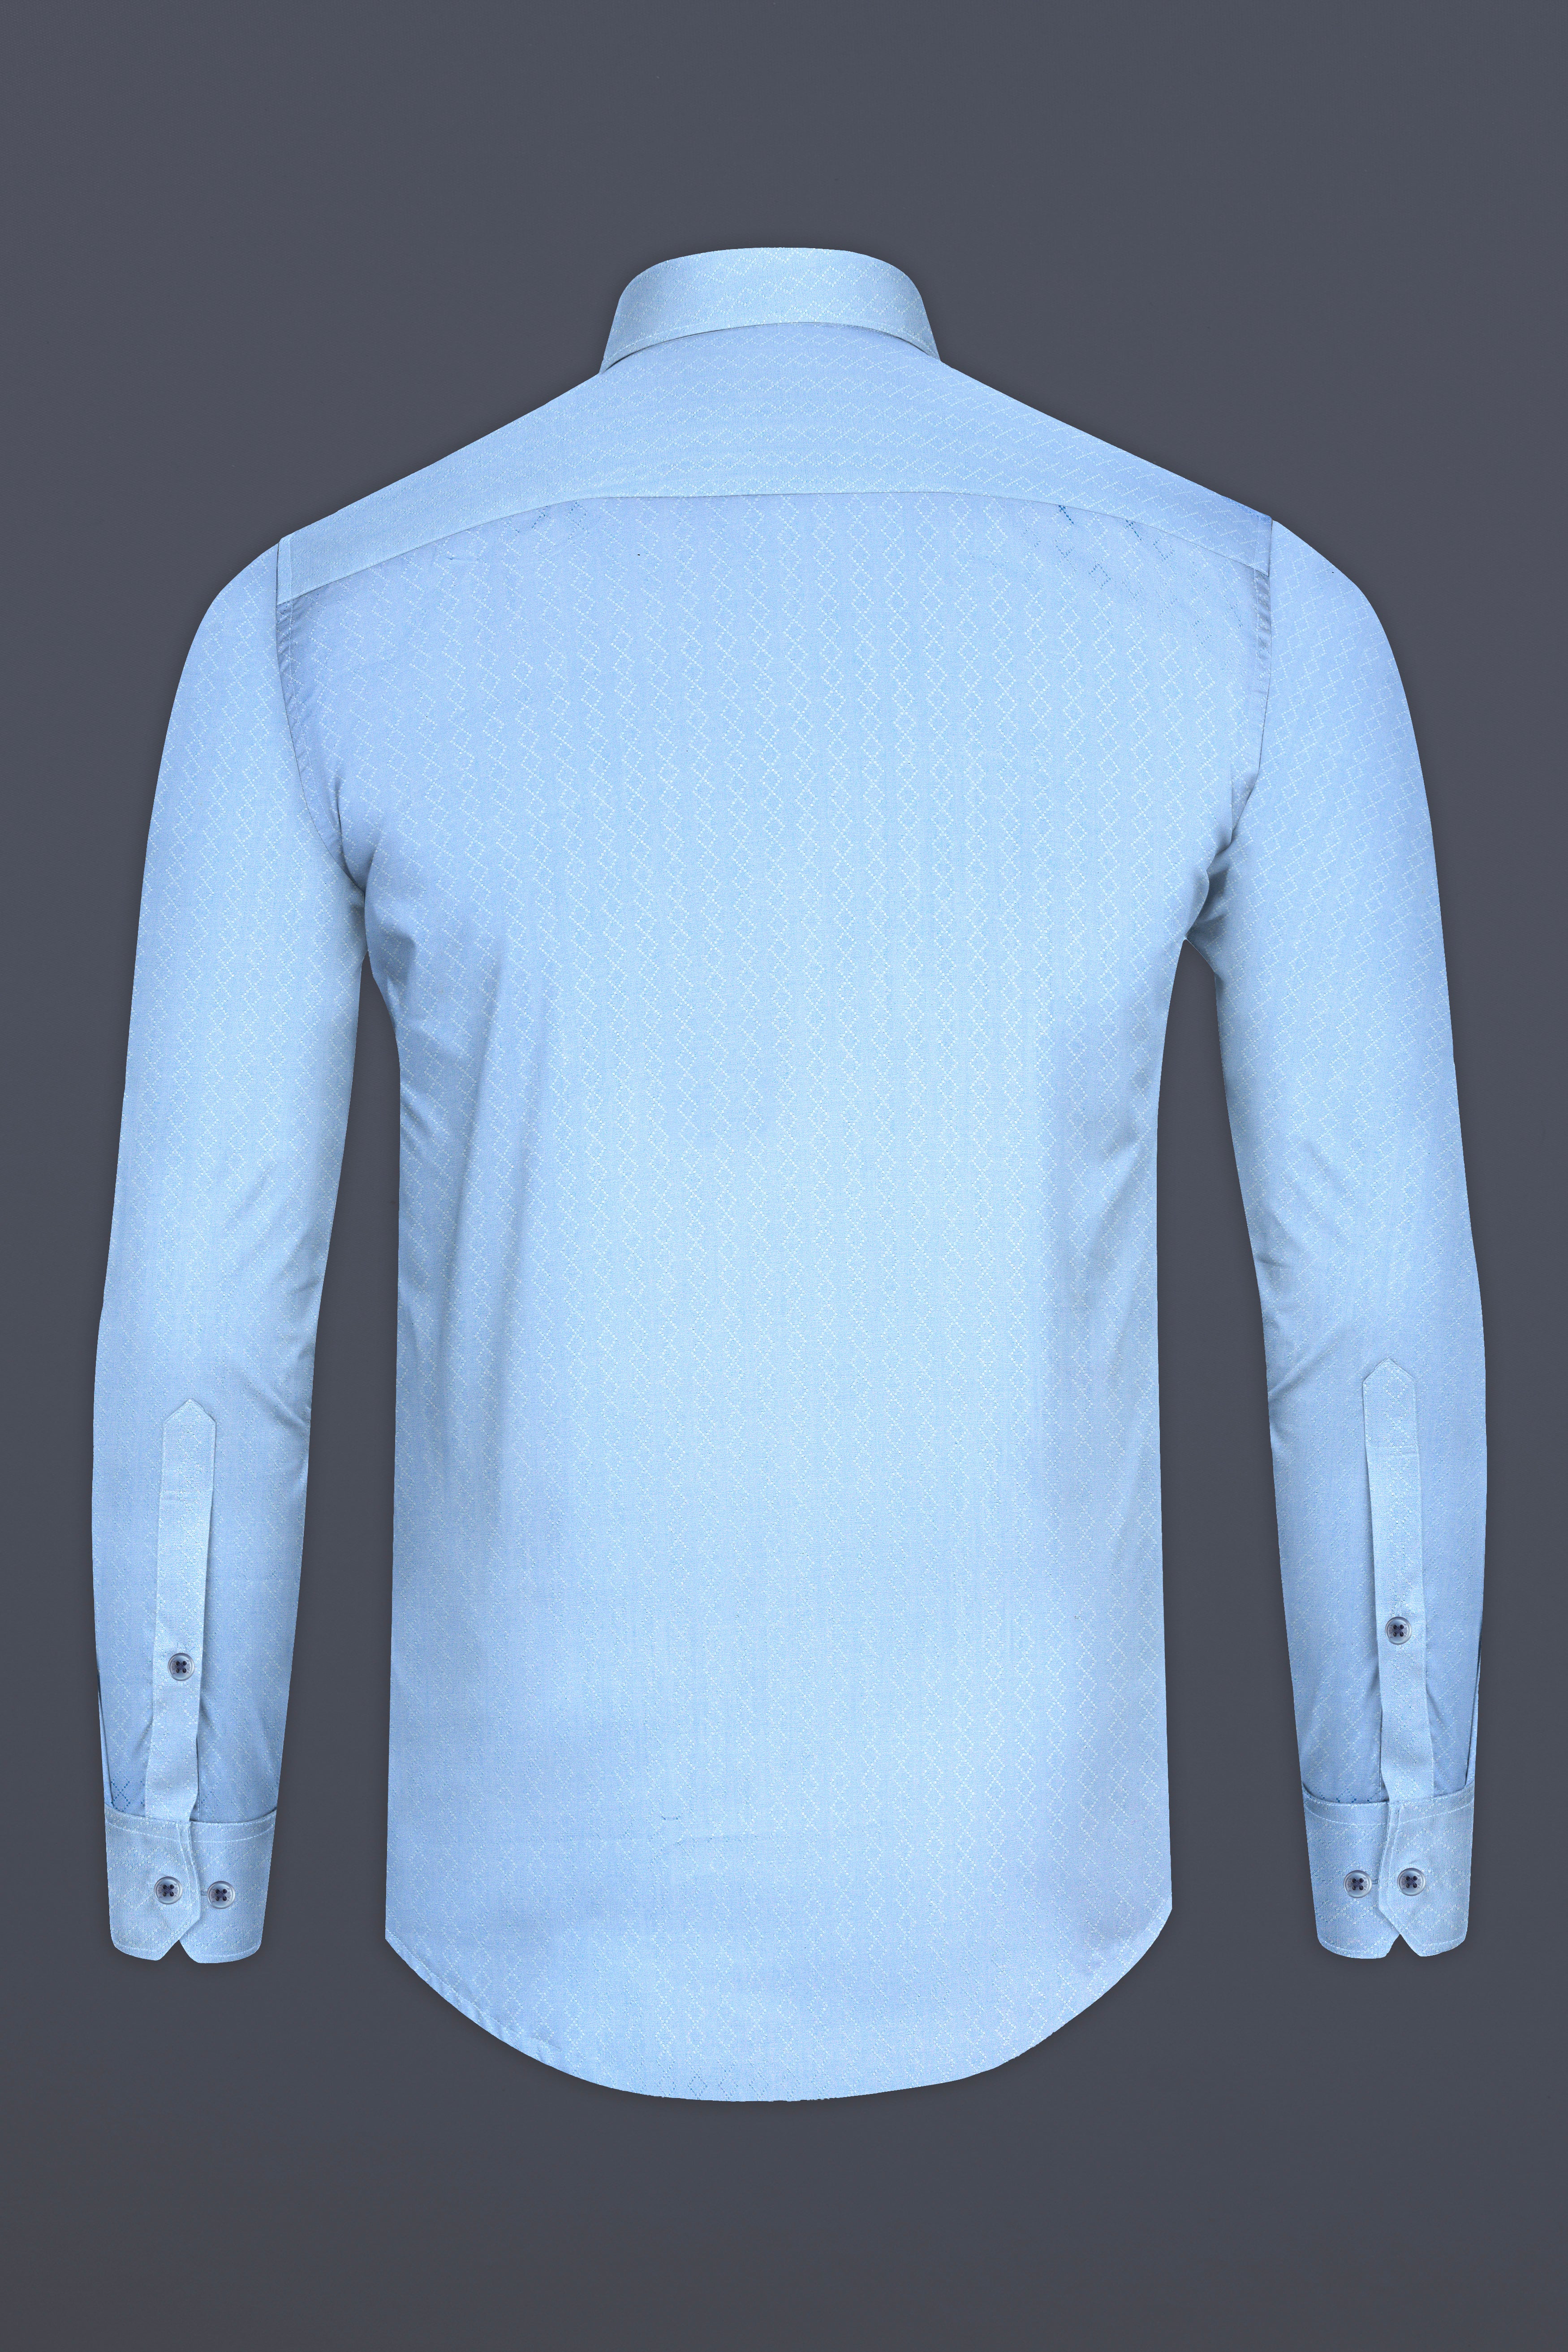 Cerulean Blue Jacquard Textured Premium Cotton Shirt